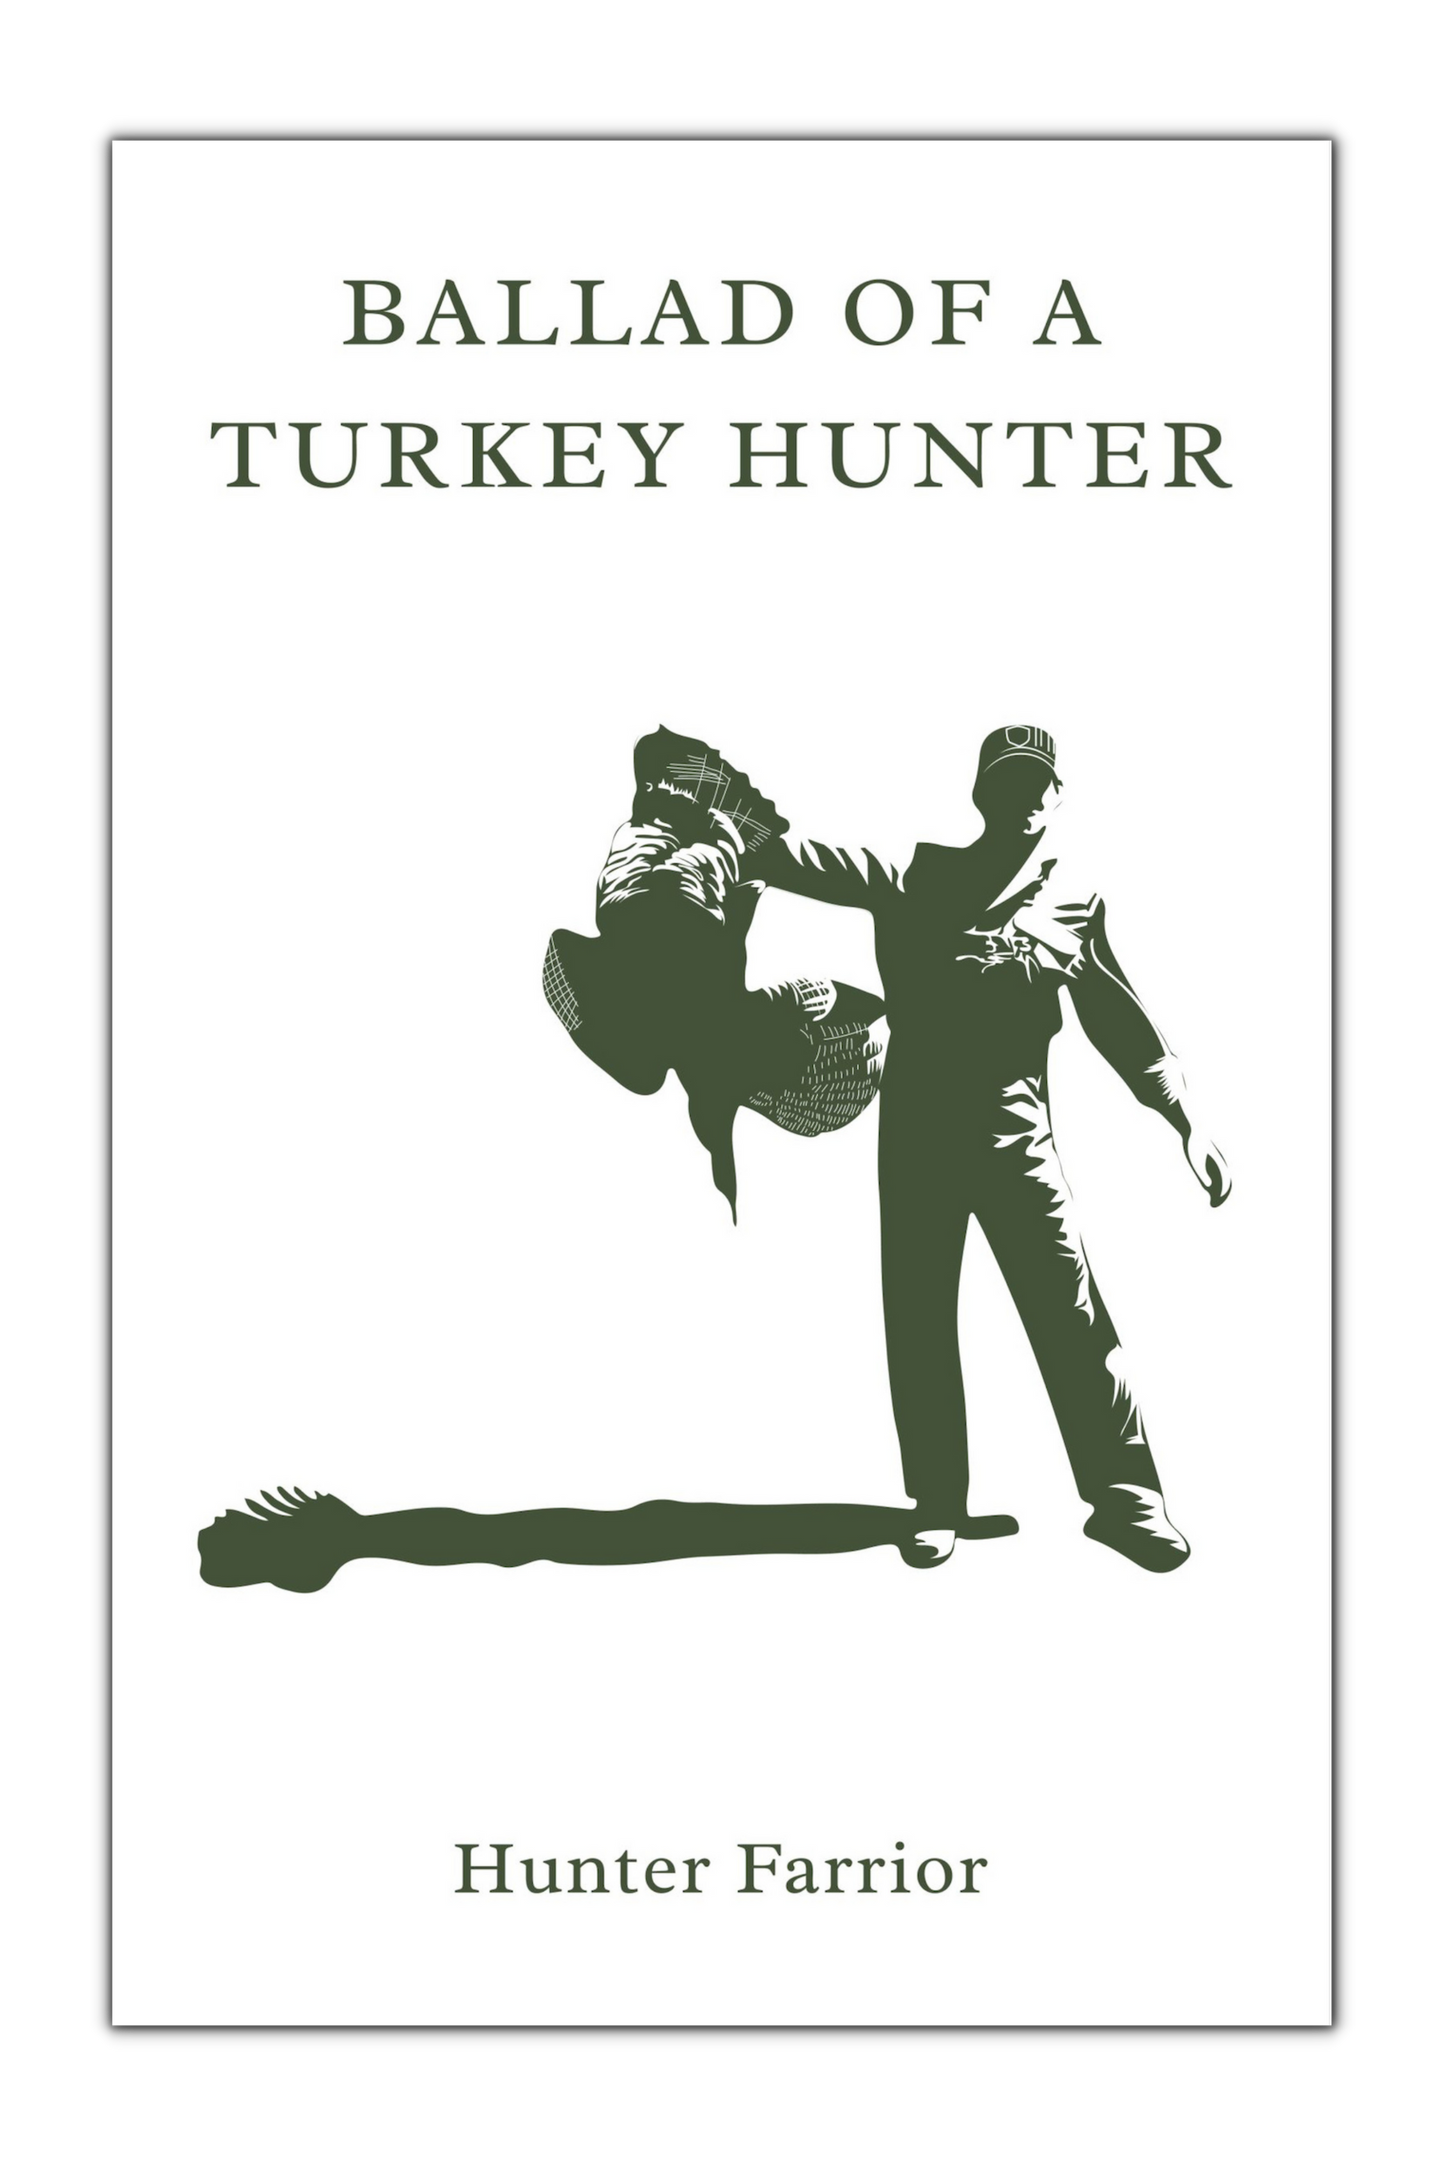 Ballad of a Turkey Hunter - Signed Hardcover